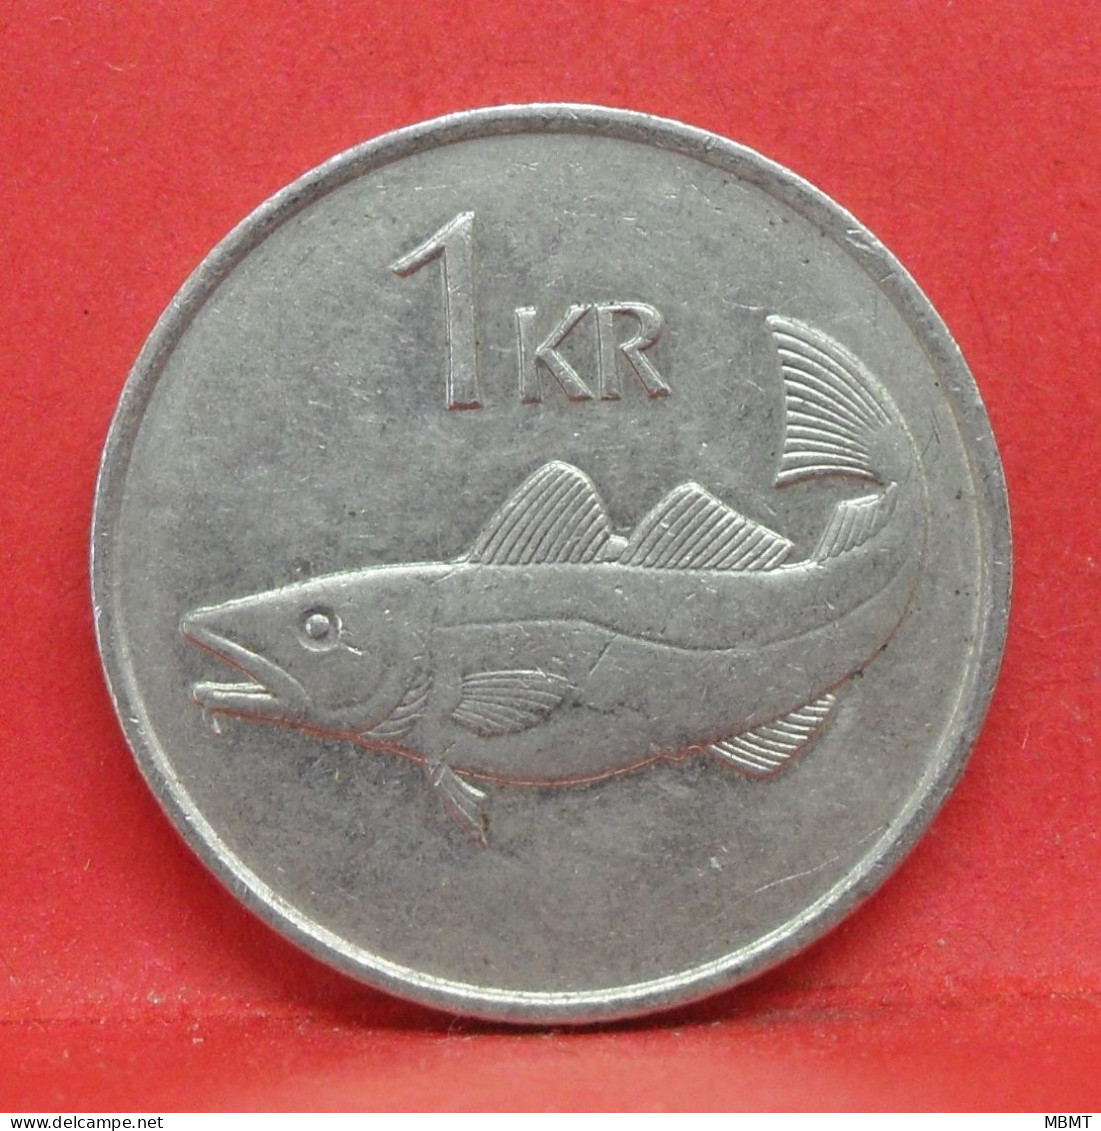 1 Krona 1984 - SUP - Pièce De Monnaie Islande - Article N°3298 - Islande